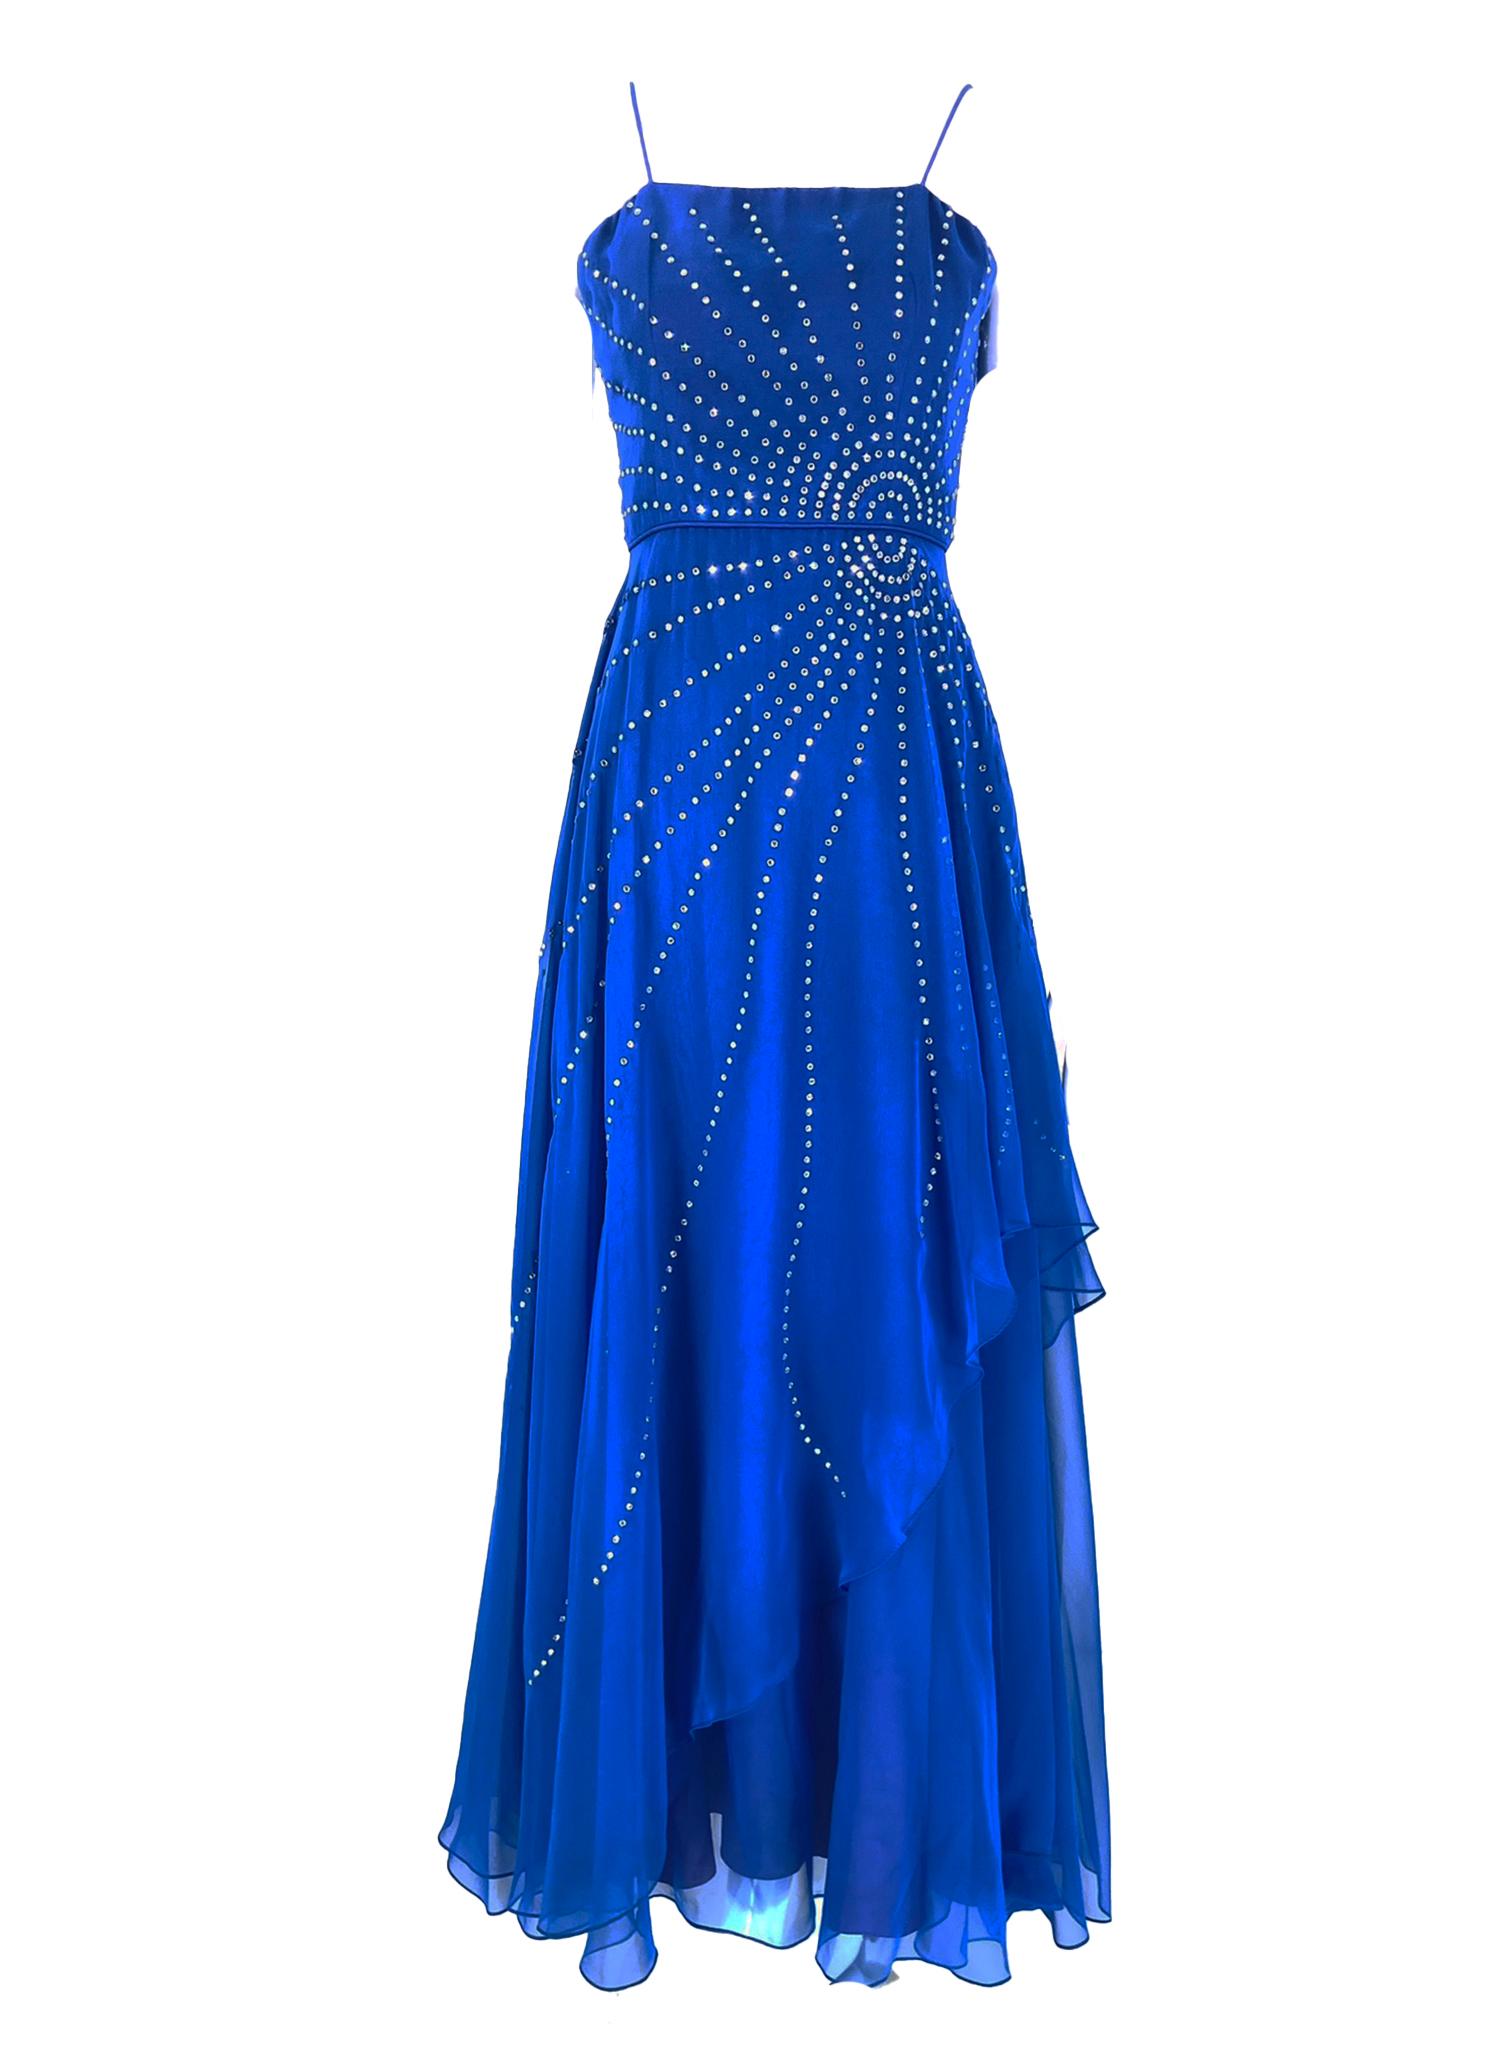 Rose Taft Couture Royal Blue Chiffon Rhinestone Sunburst Evening Gown 1970s For Sale 1